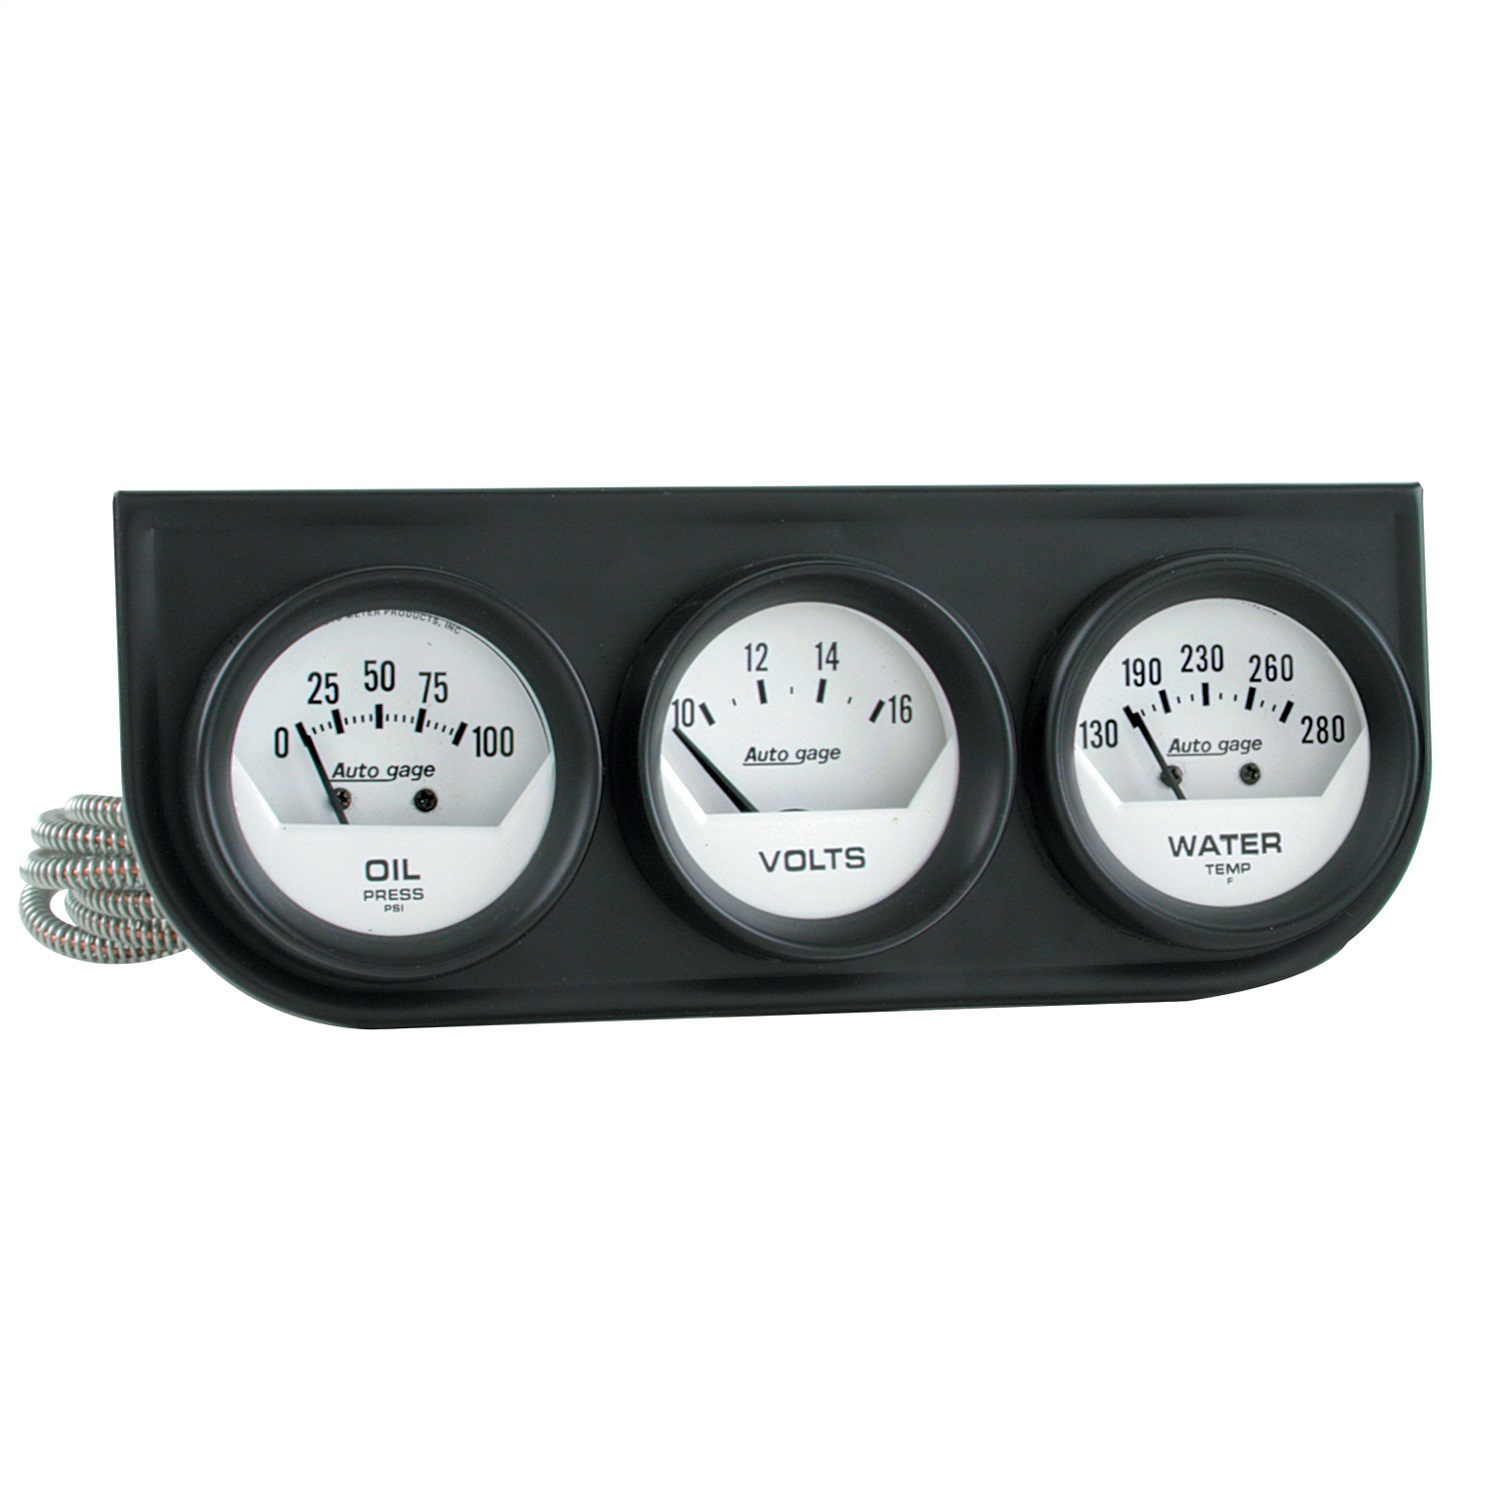 Auto Meter Auto Meter 2324 Autogage; White Oil/Volt/Water; Black Steel Console